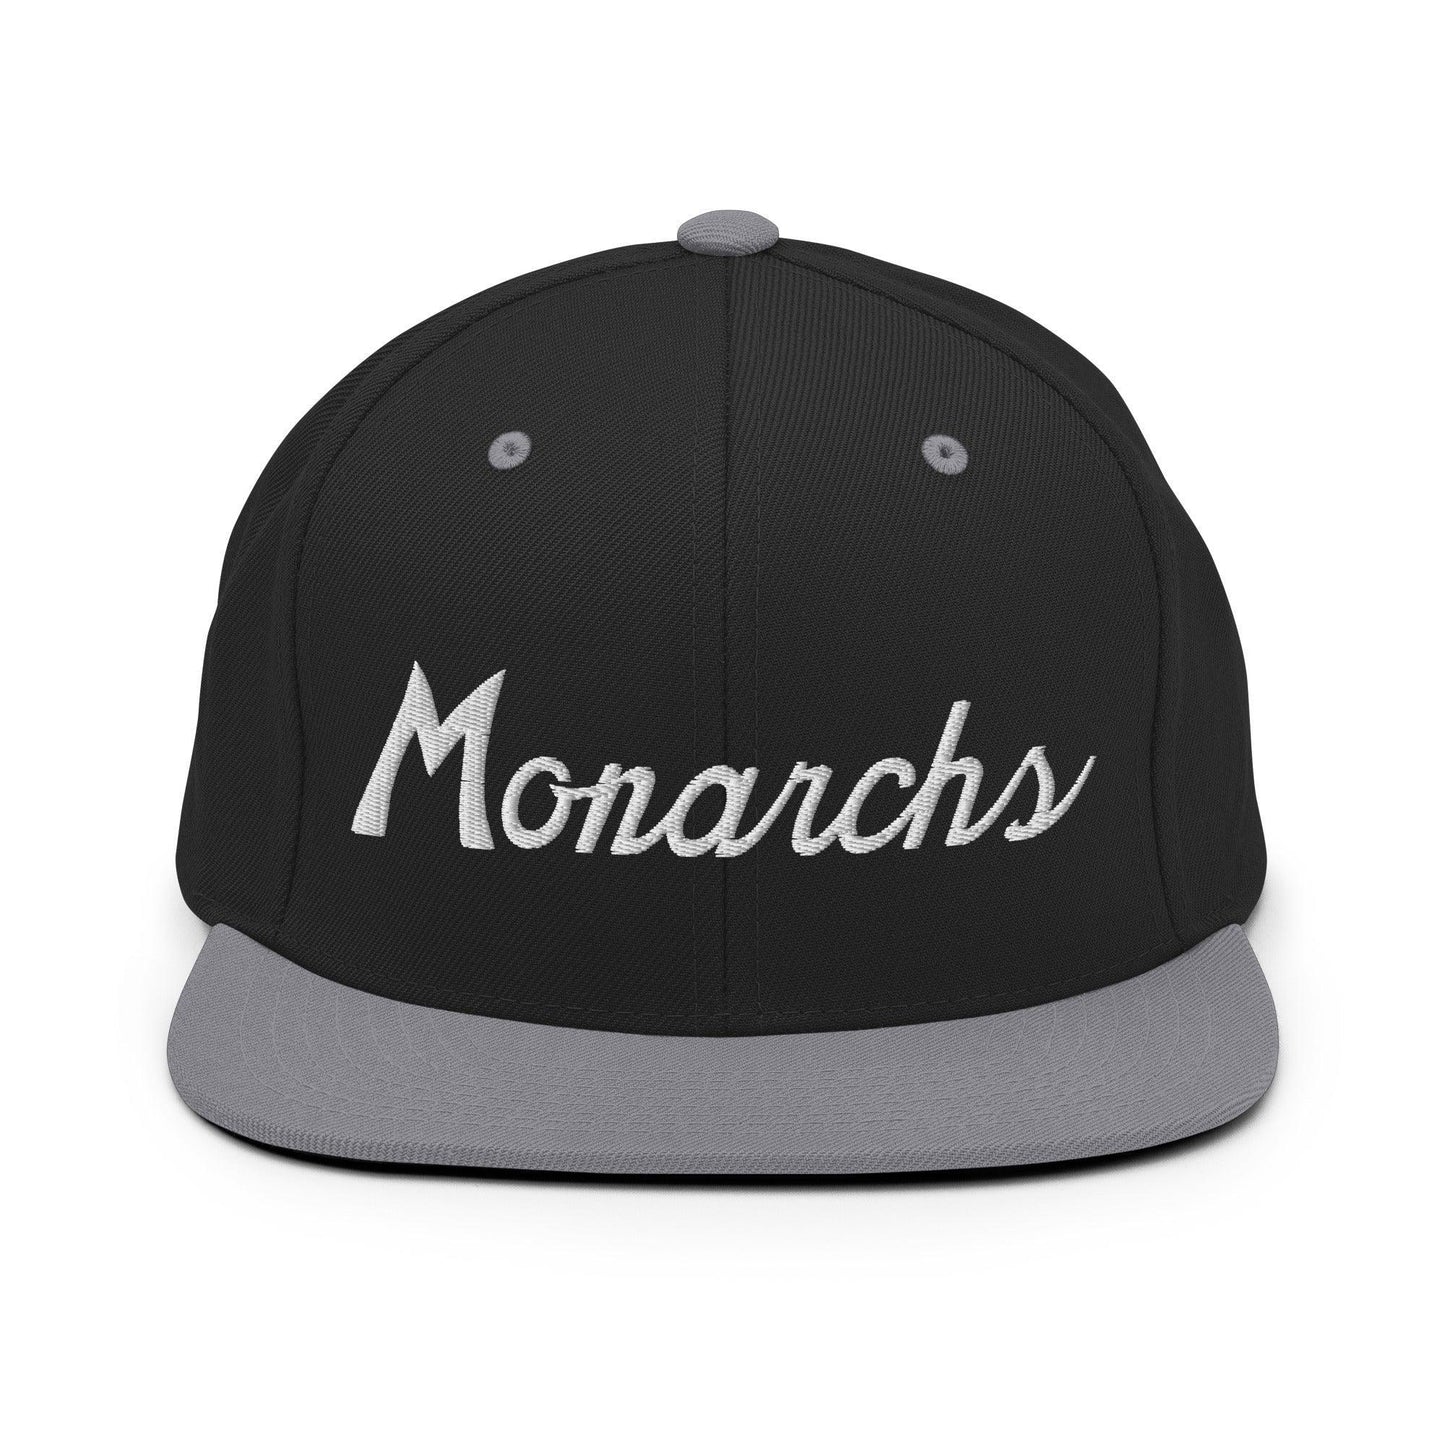 Monarchs School Mascot Script Snapback Hat Black/ Silver